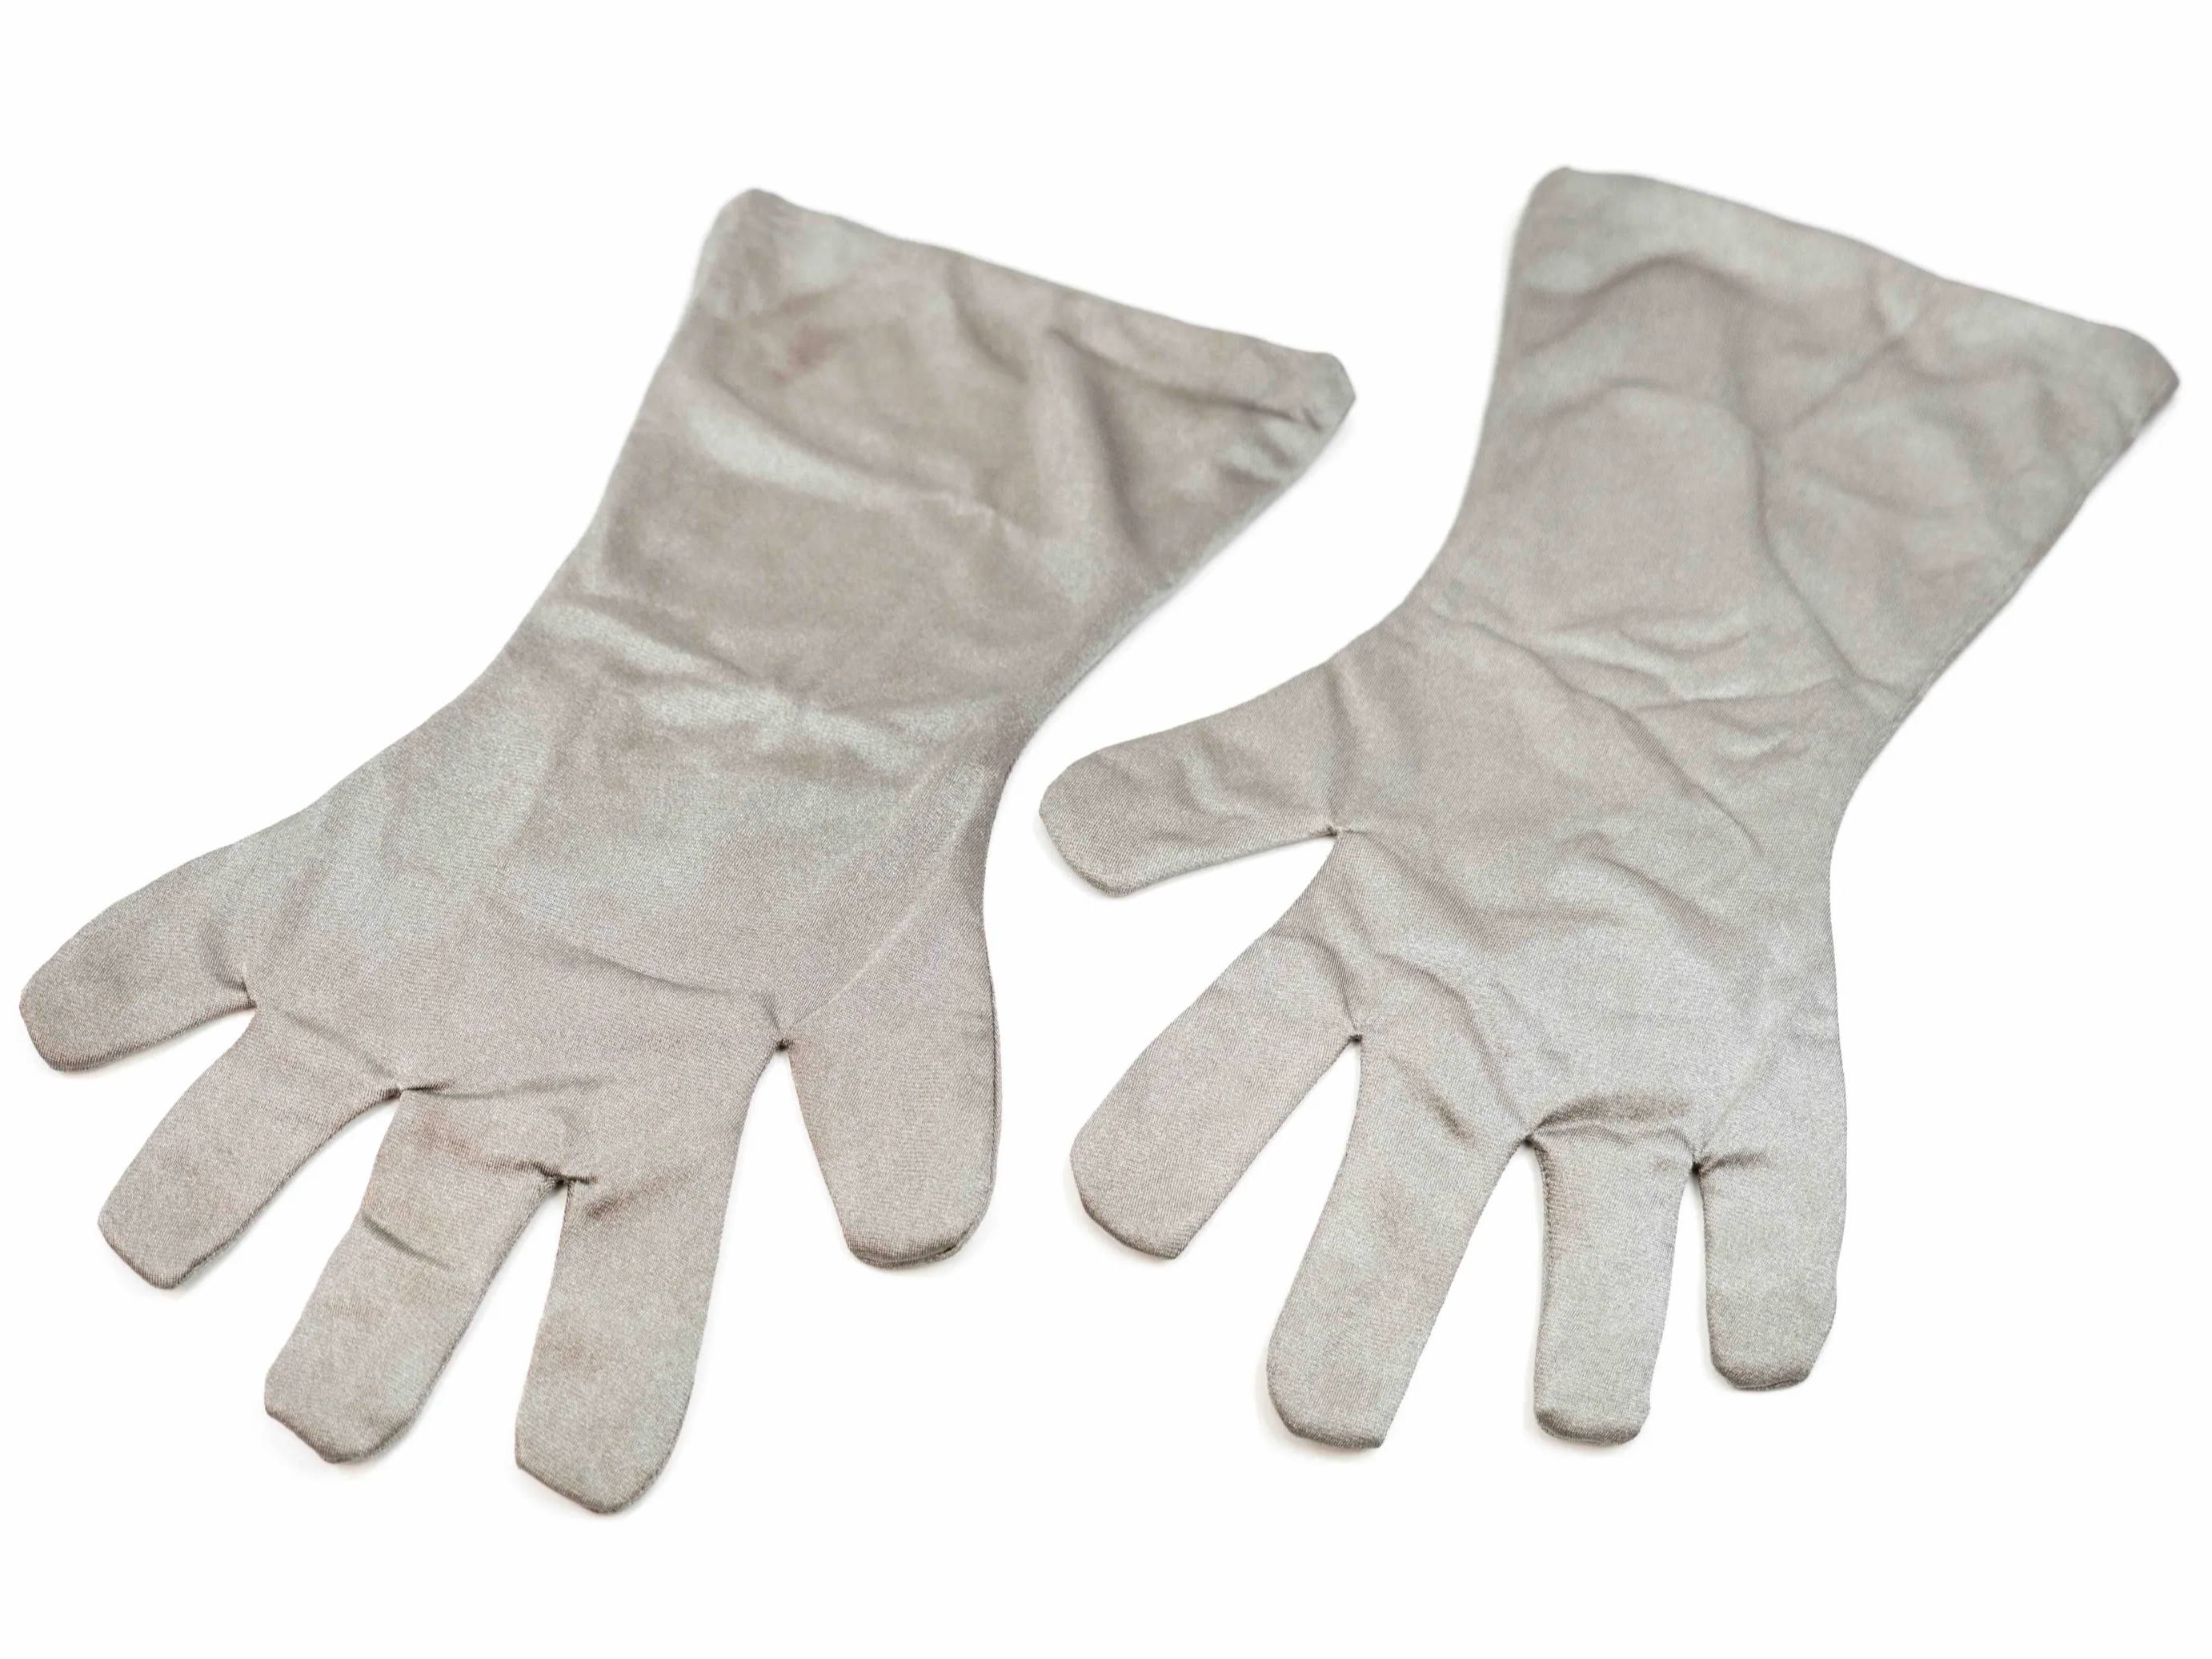 Mission Darkness™ TitanRF Faraday Gloves conductive material blocks RF signals